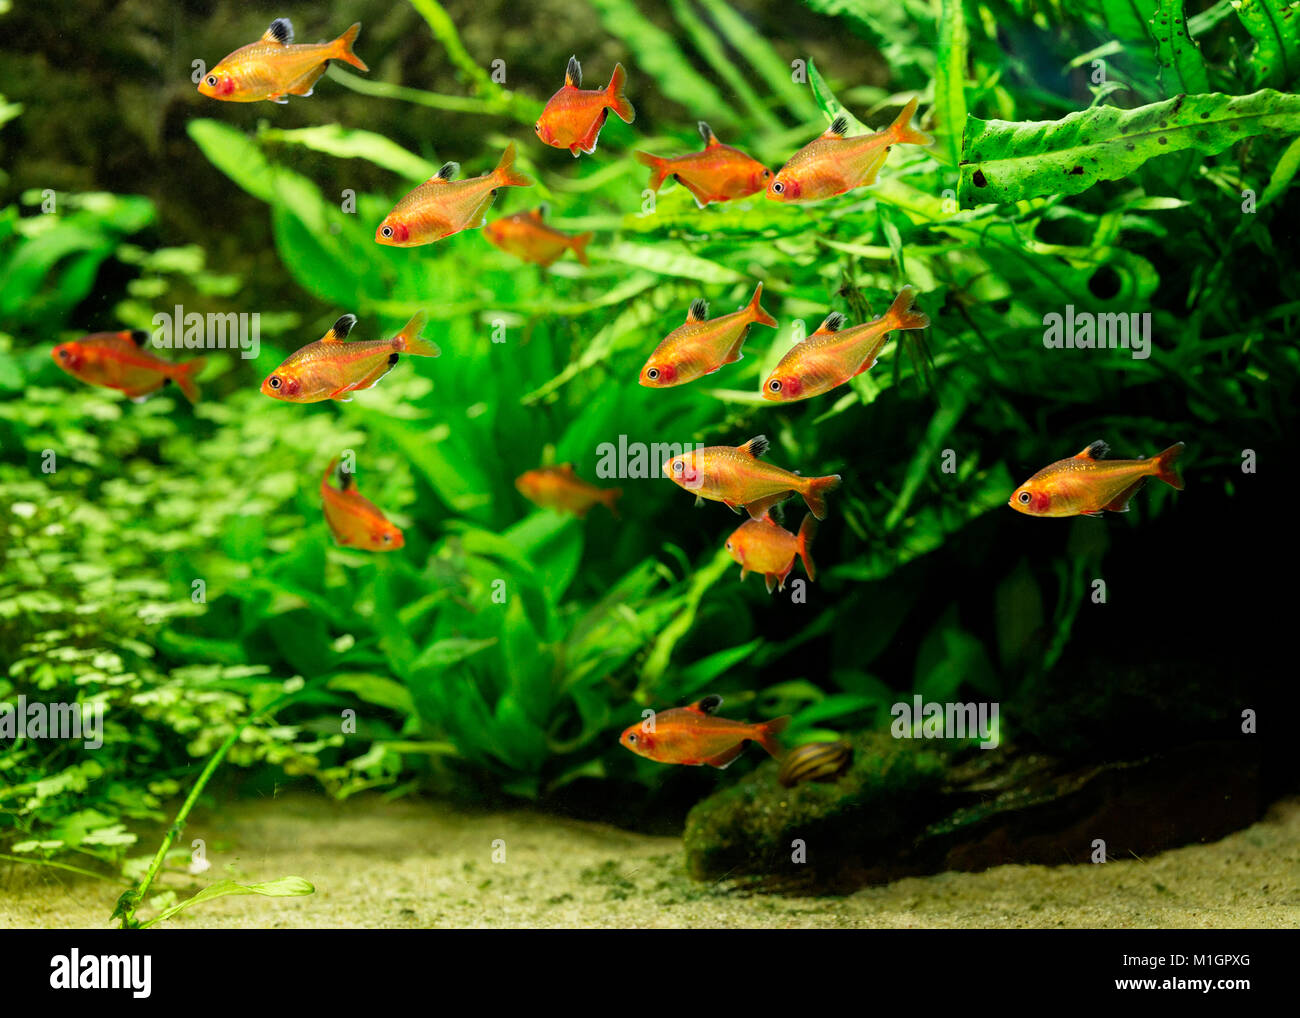 Serpae Tetra (Hyphessobrycon eques). Swarm in an aquarium Stock Photo